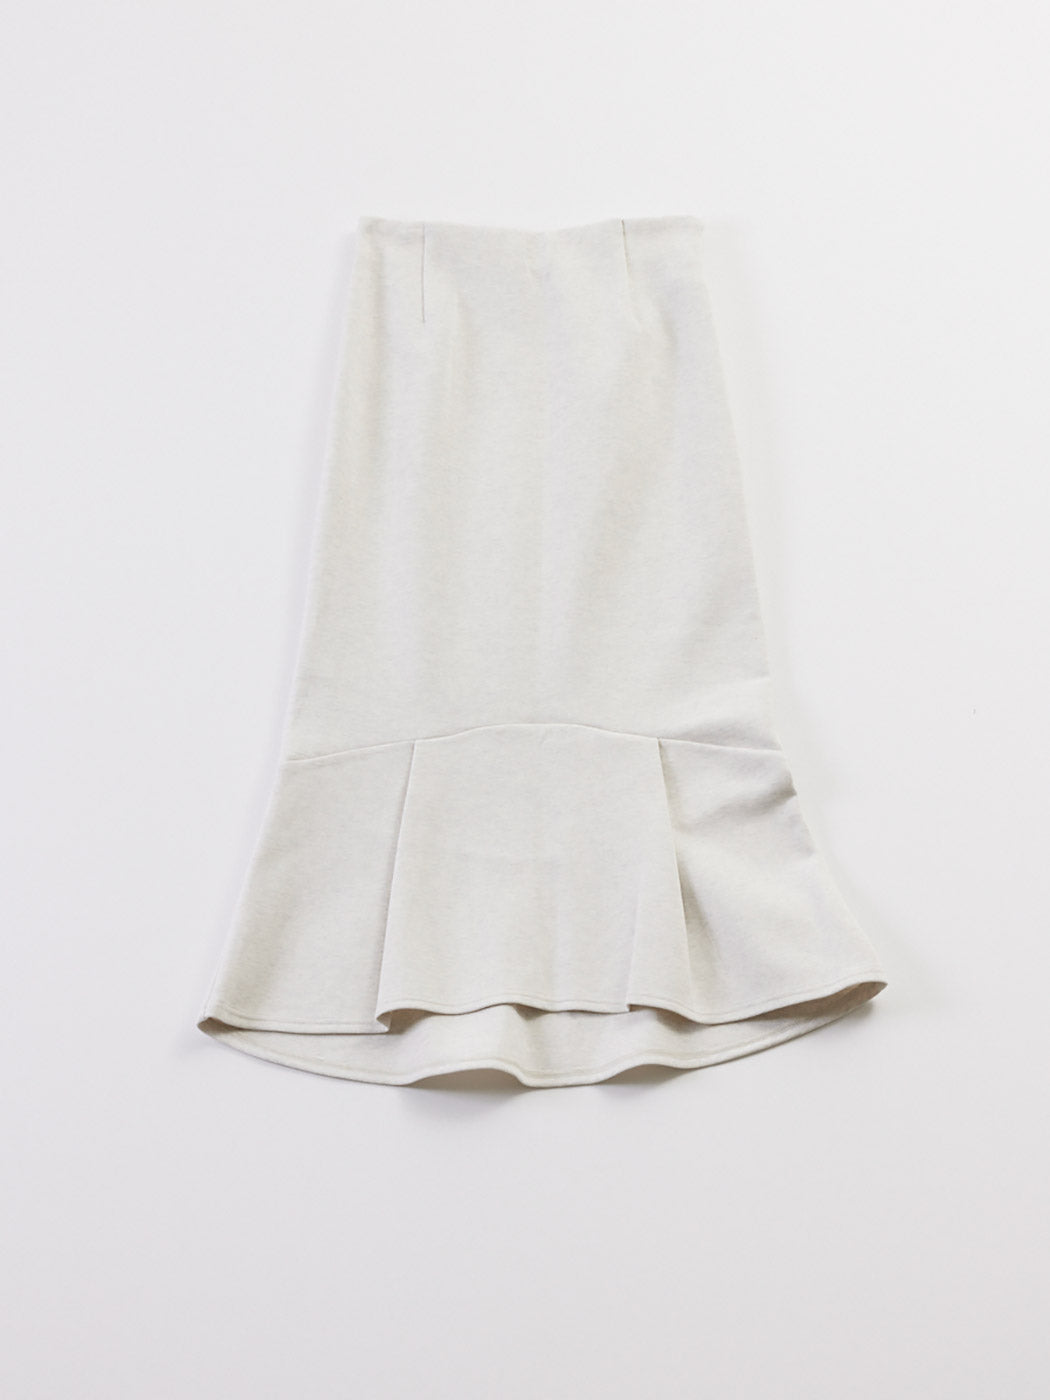 Cardboard Knit Skirt